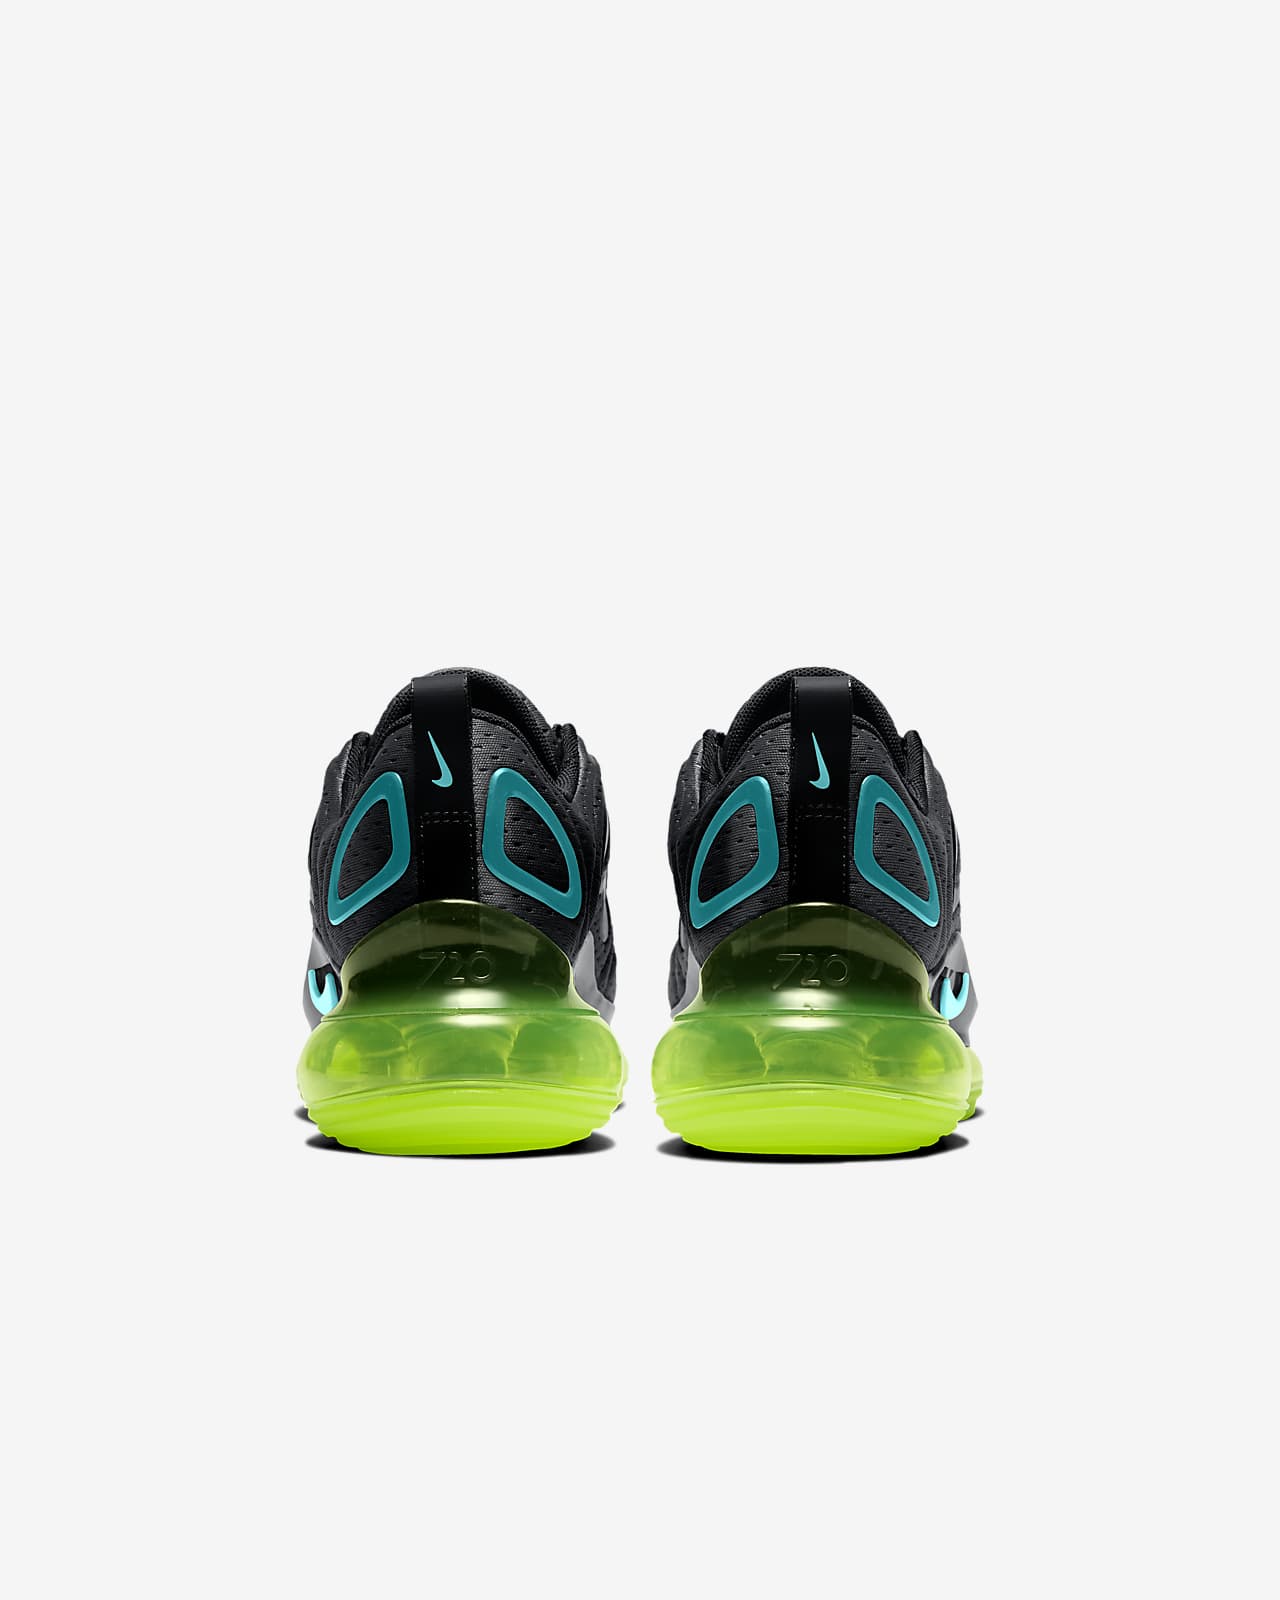 Calzado para niños talla pequeña/grande Nike Air Max 720 كيبر